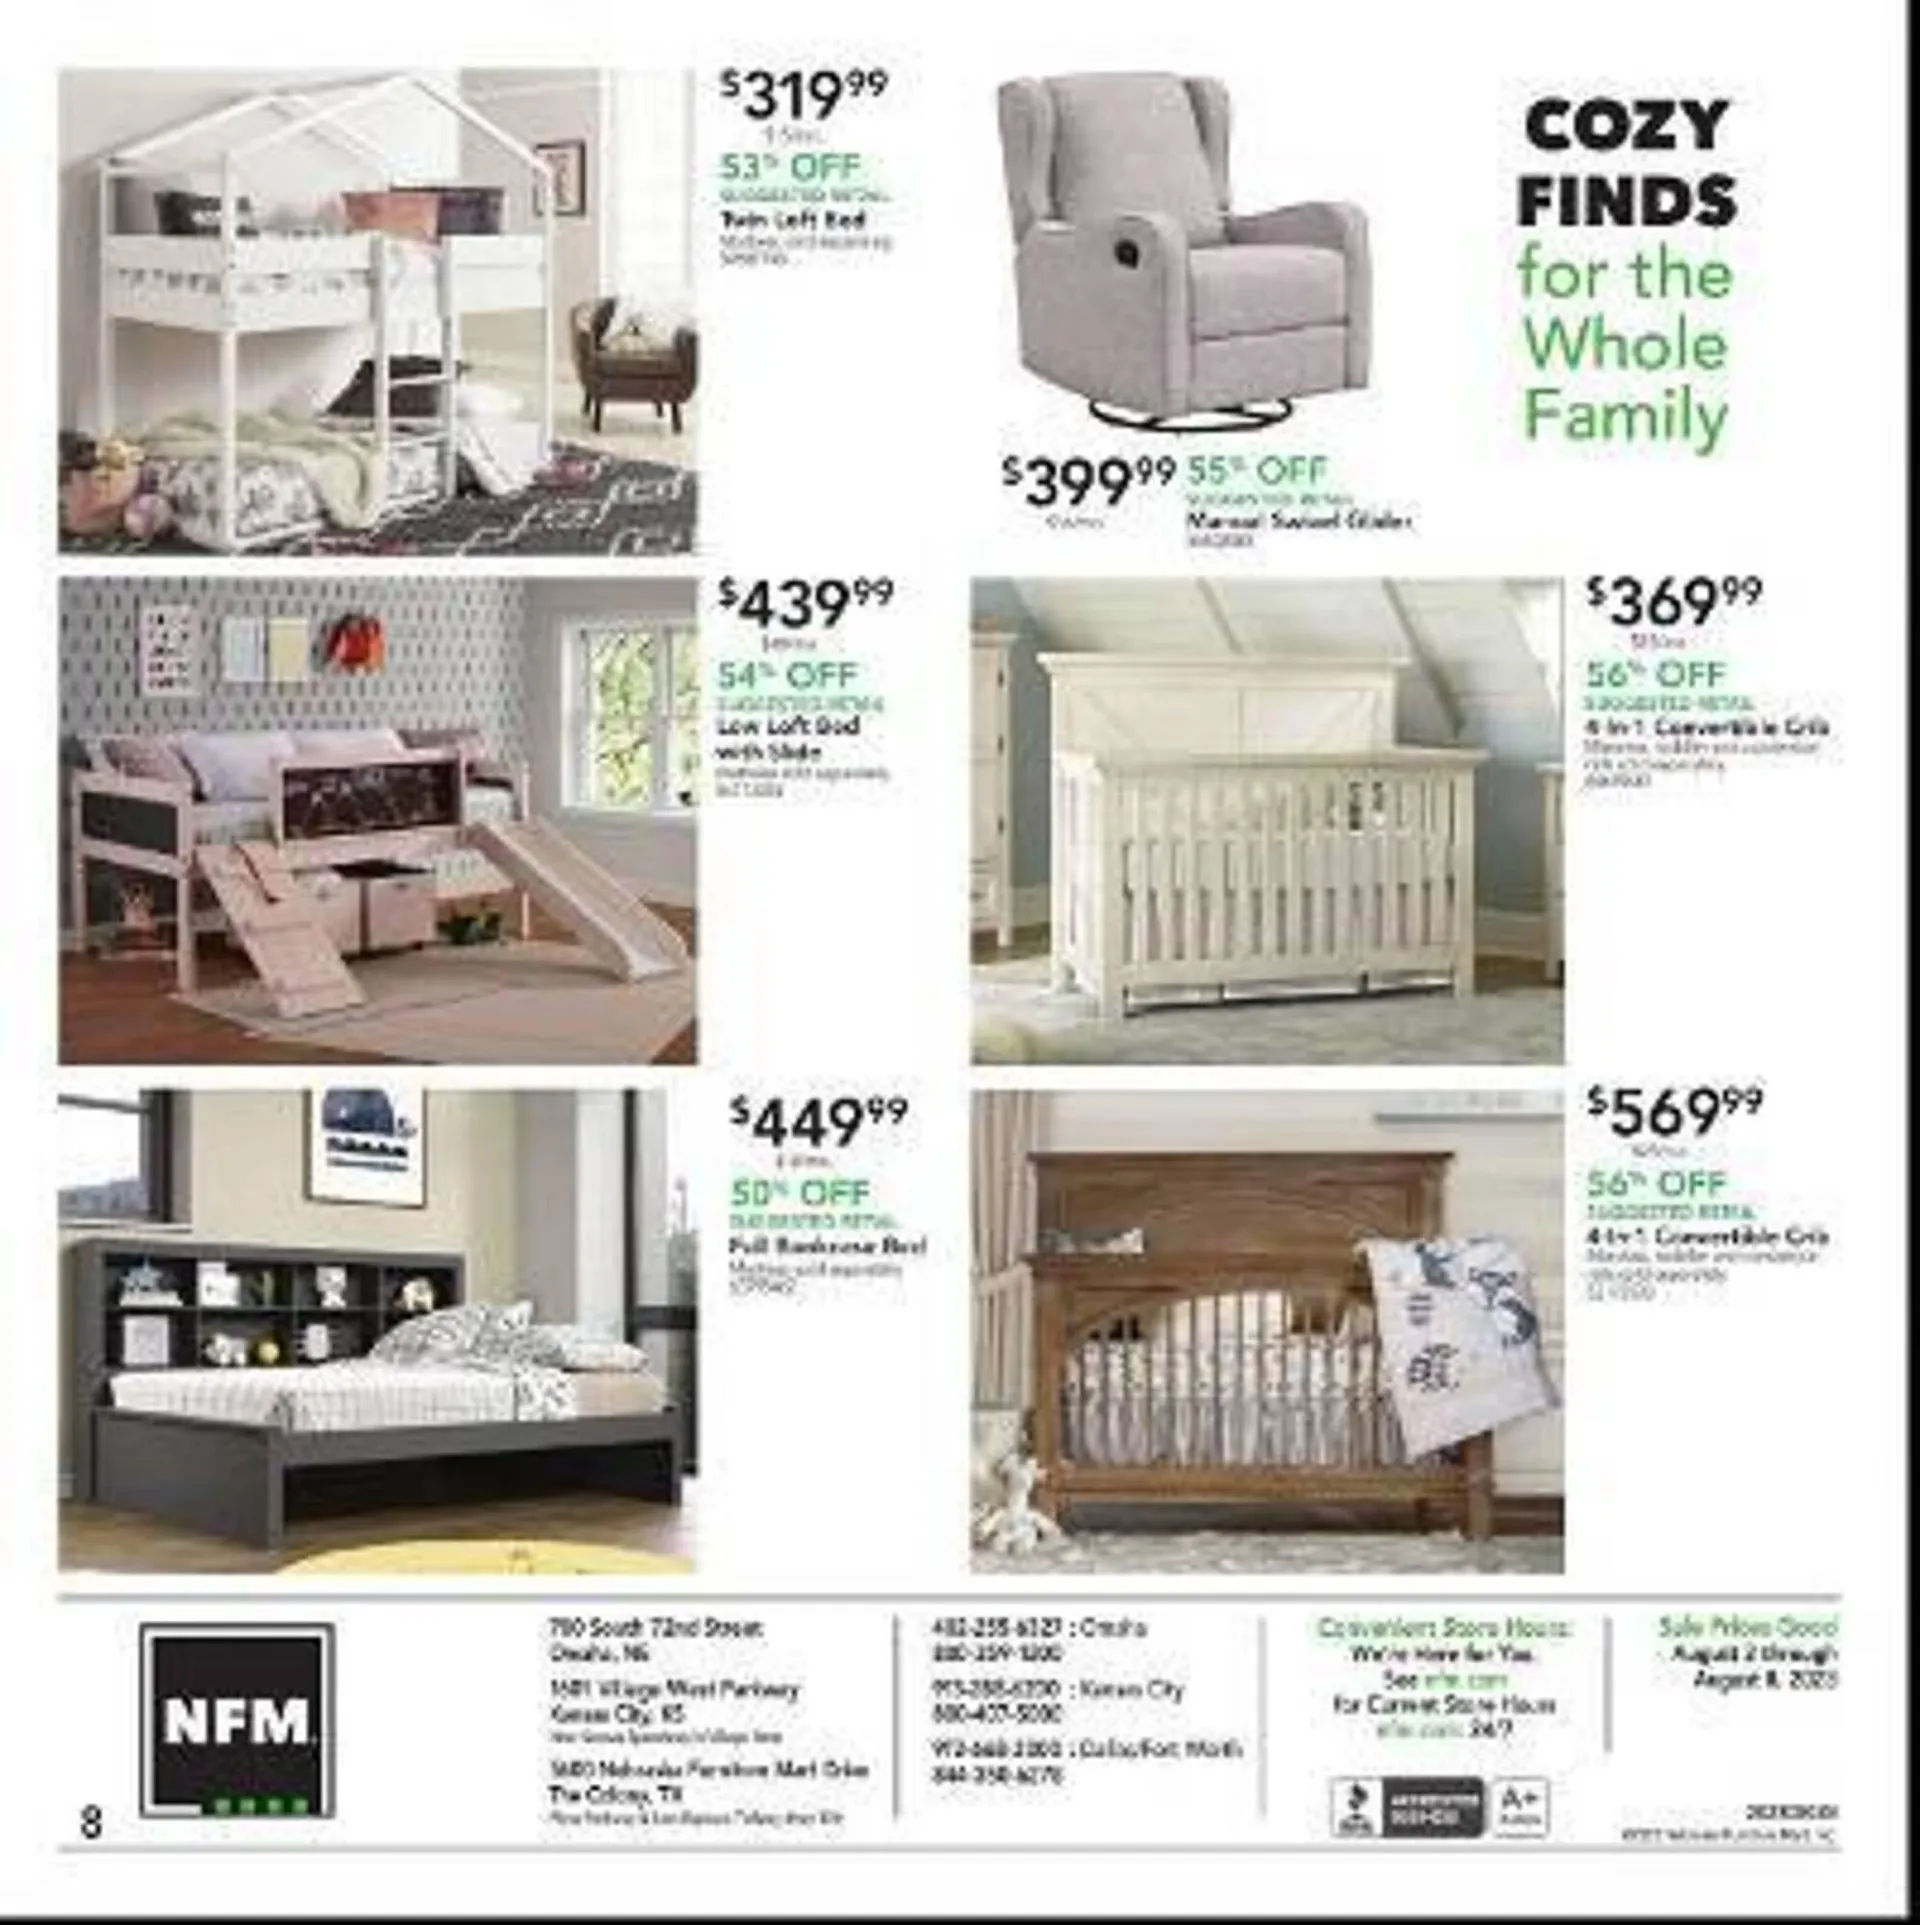 Nebraska Furniture Mart Weekly Ad - 8